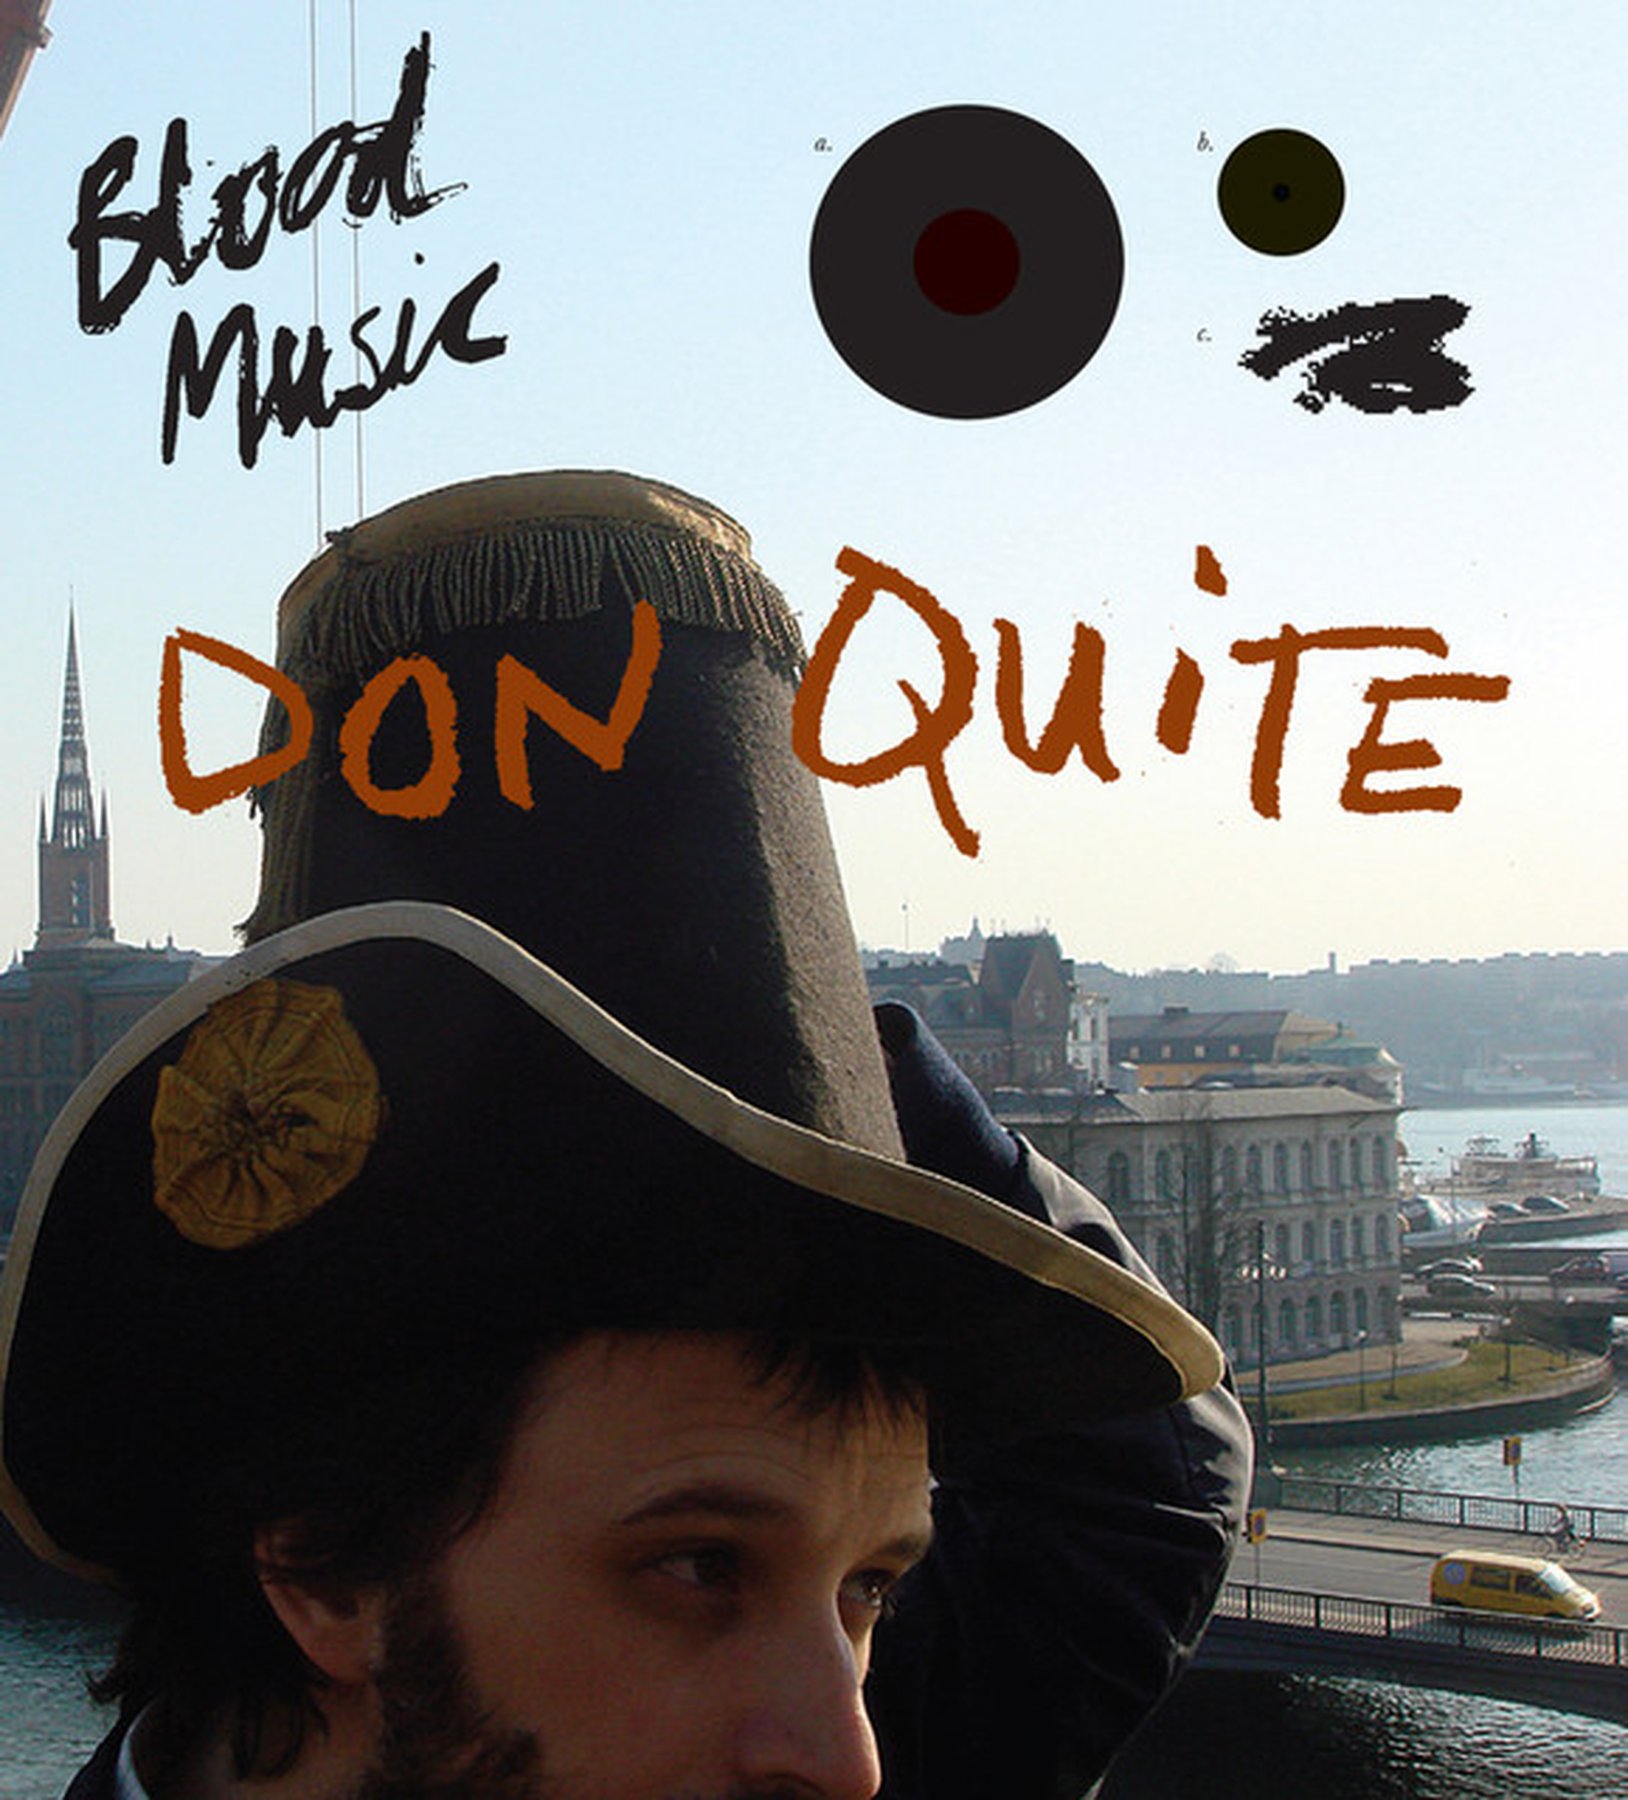 Make It Happen, Recordlabel, 1998-2010, Blood Music "Don Quite", released in November 2007